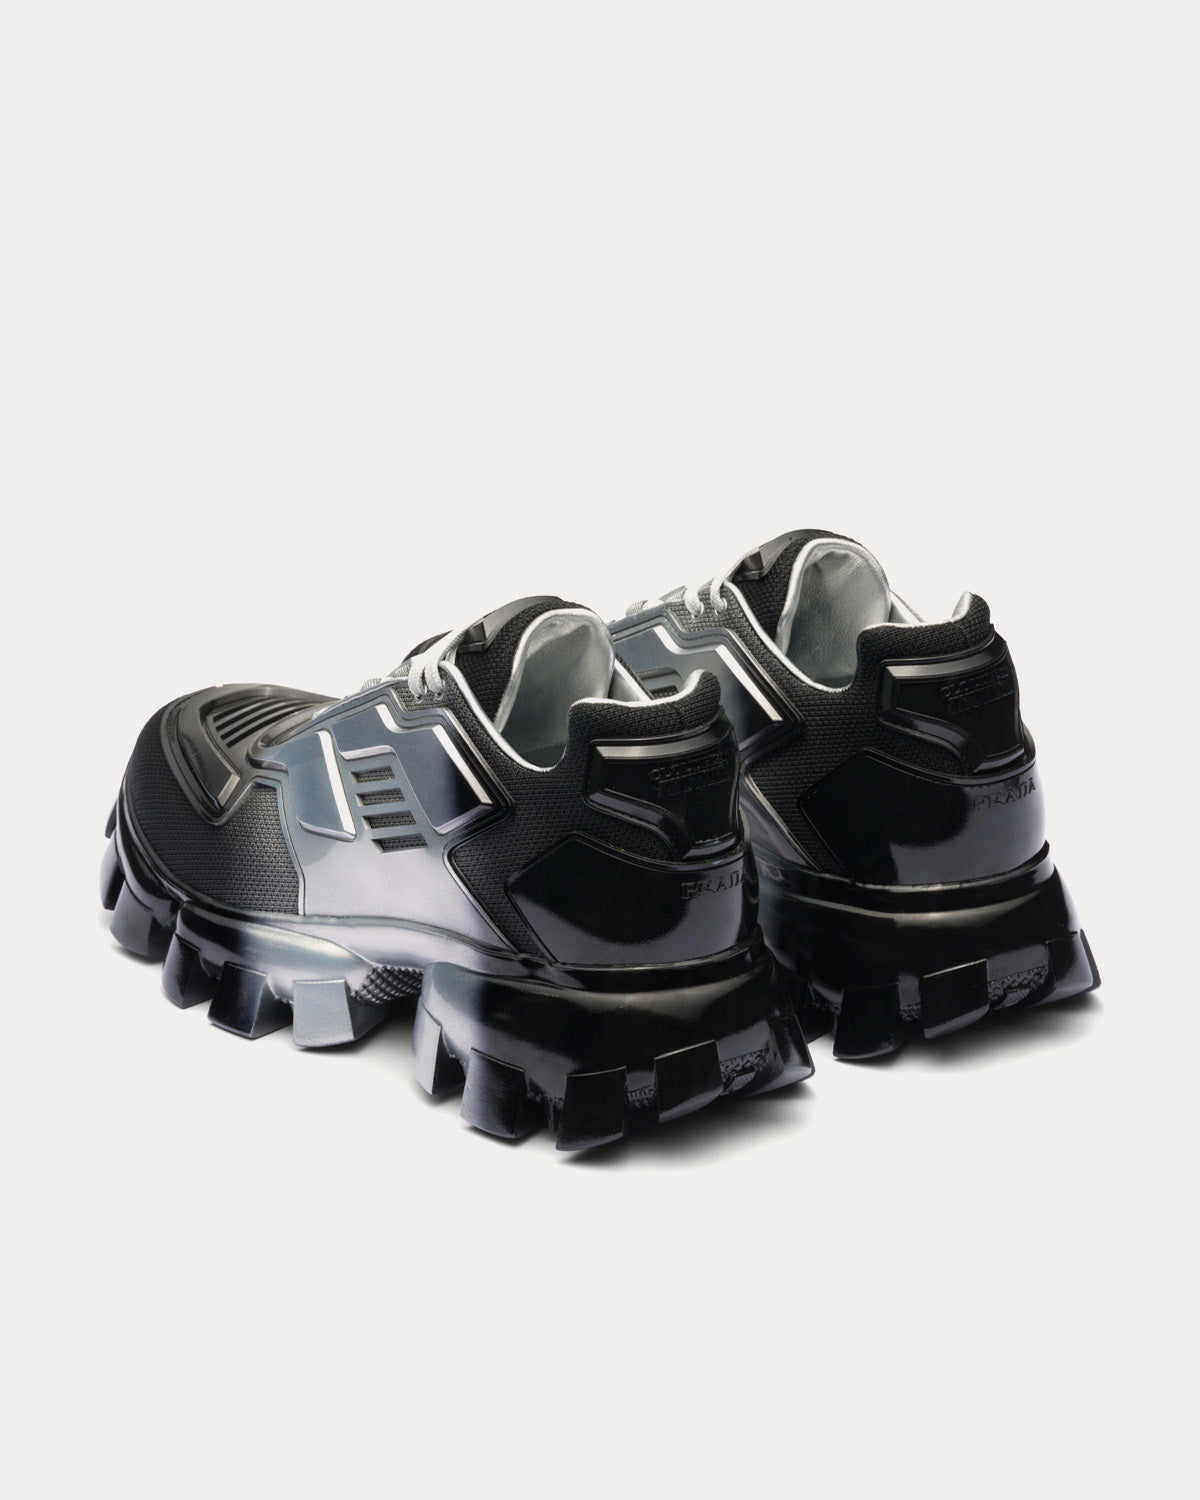 Prada Cloudbust Thunder Silver / Black Low Top Sneakers - Sneak in 